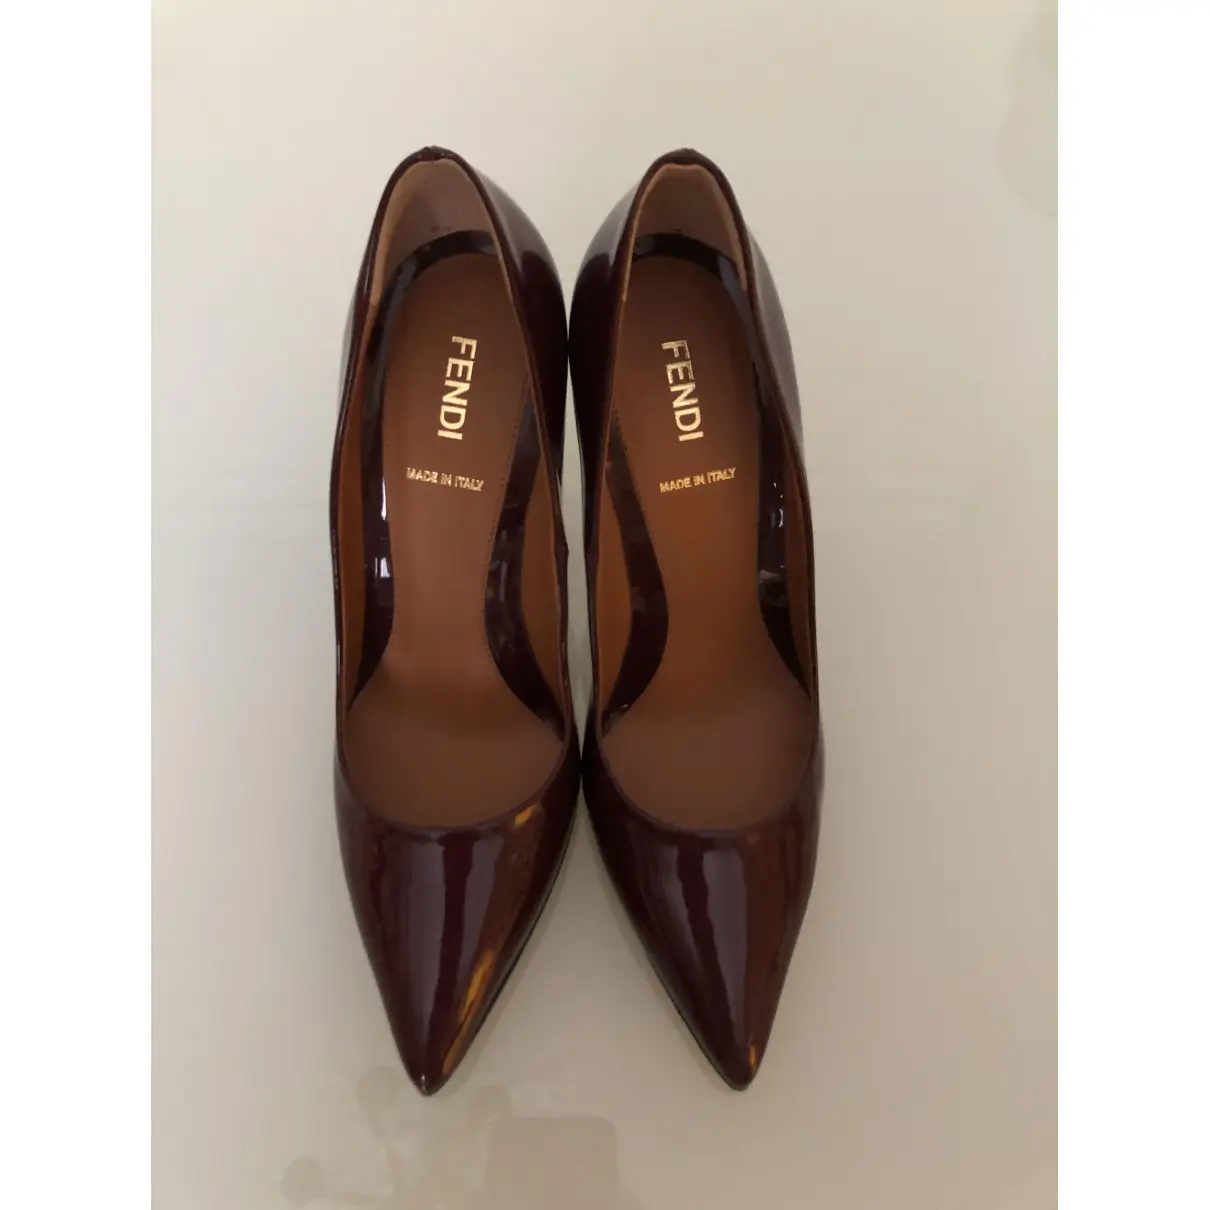 Buy Fendi Patent leather heels online